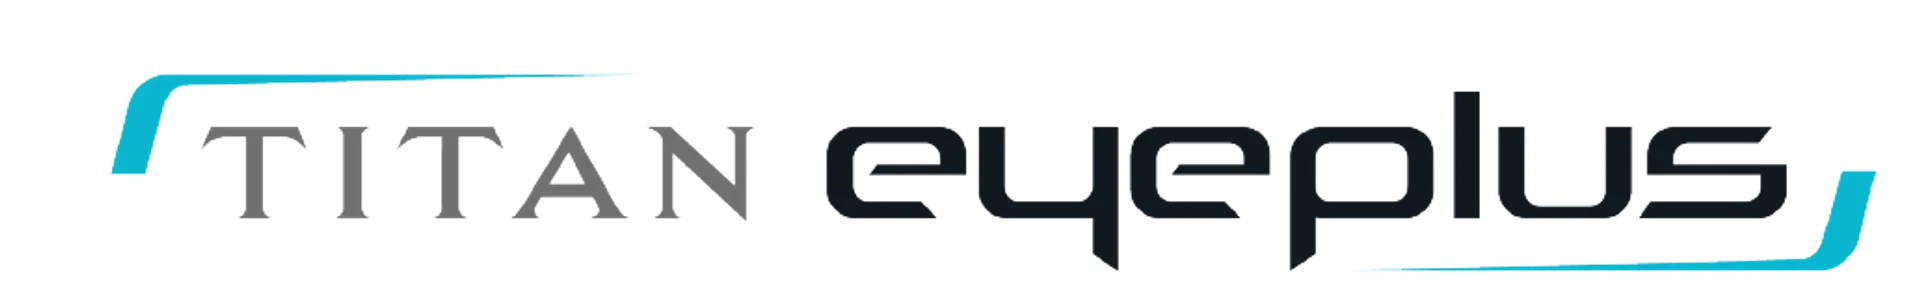 TITAN EYEPLUS logo. Current catalogue